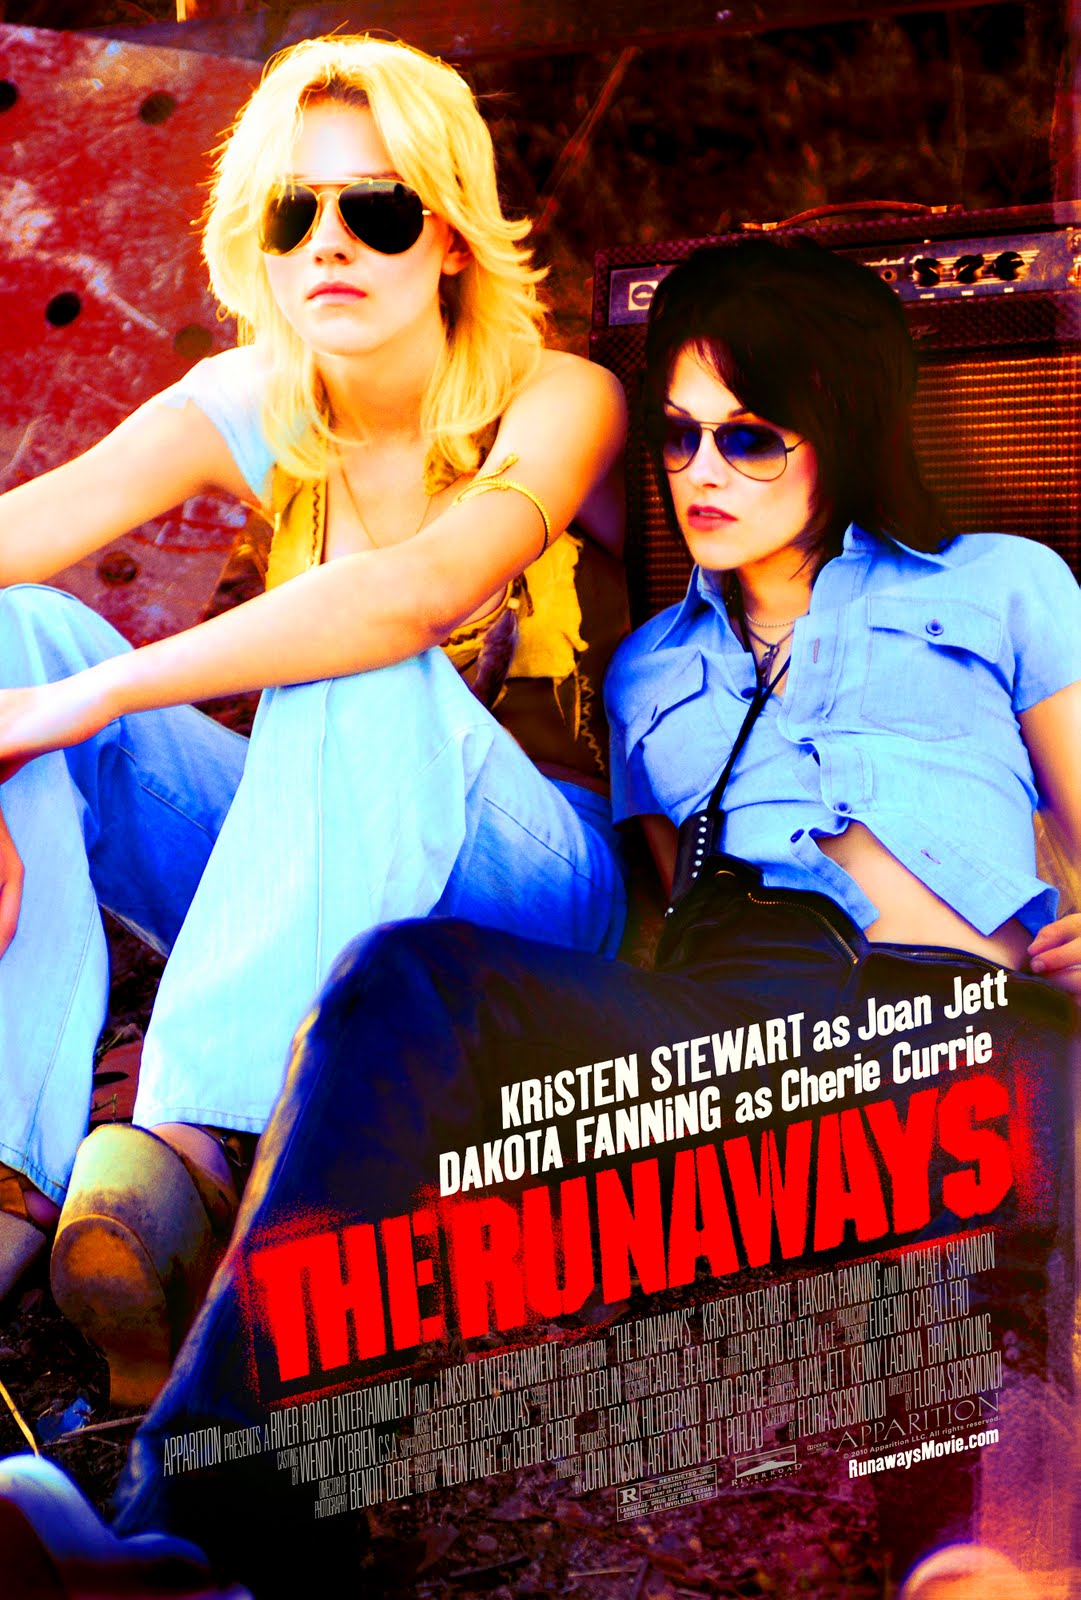 https://blogger.googleusercontent.com/img/b/R29vZ2xl/AVvXsEixeg4aVyF-QOwmlO8aBCOwgCa47_Vx1i8E0yY43825p3WdoS7JF31pombEVSuz9XhuXVpqlctiMdYnWgQtxELMhibv2cagob9uDnodgXB18Z7Kw9llEr223Fne30EImO8JRtcIRsYQTjE/s1600/the-runaways-2010-movie-poster.jpg